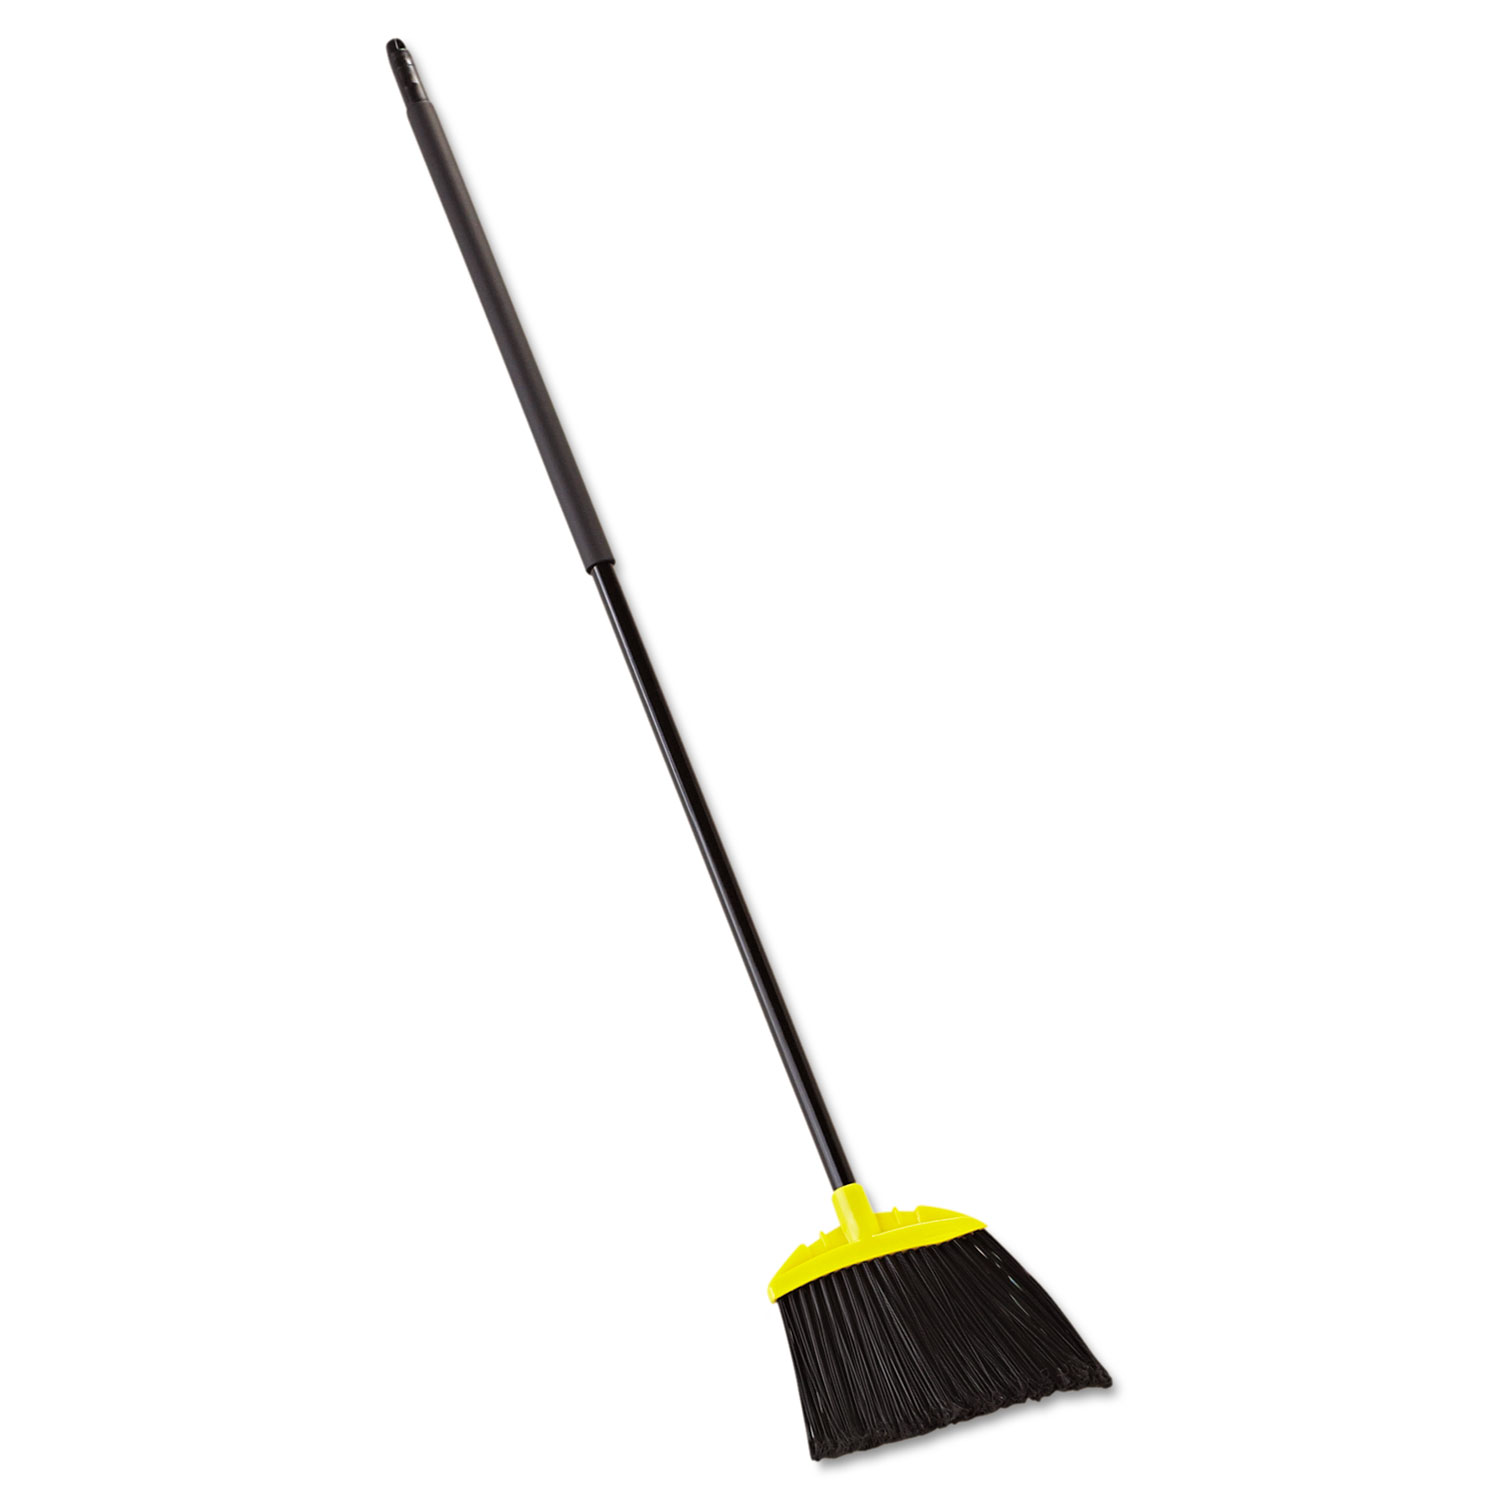  Rubbermaid Commercial FG638906BLA Jumbo Smooth Sweep Angled Broom, 46 Handle, Black/Yellow, 6/Carton (RCP638906BLACT) 